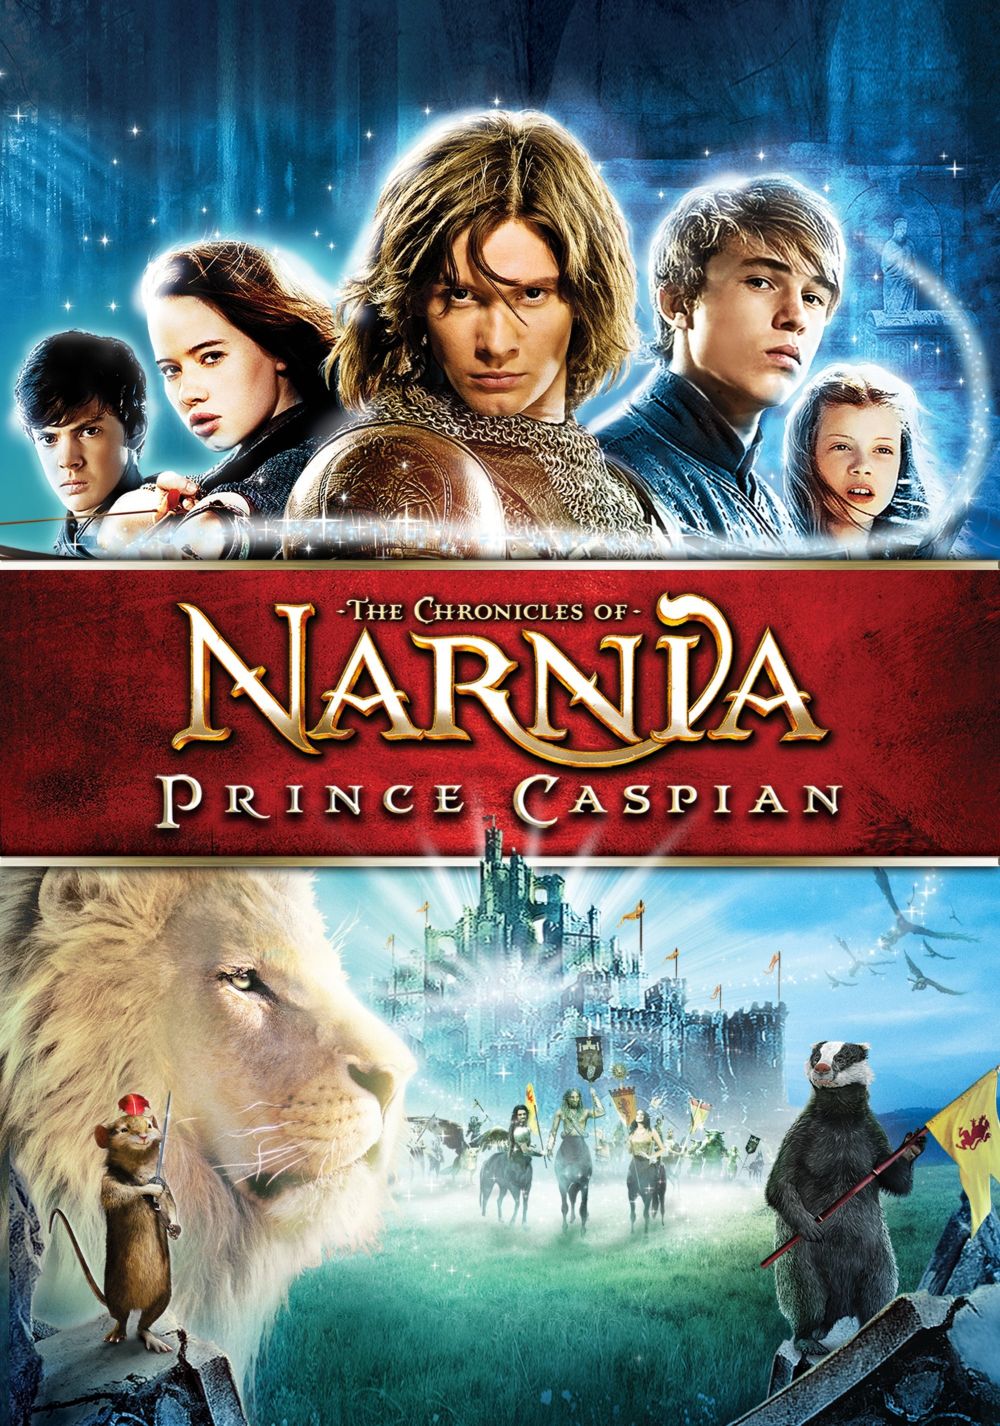 Narnia 2 movie download